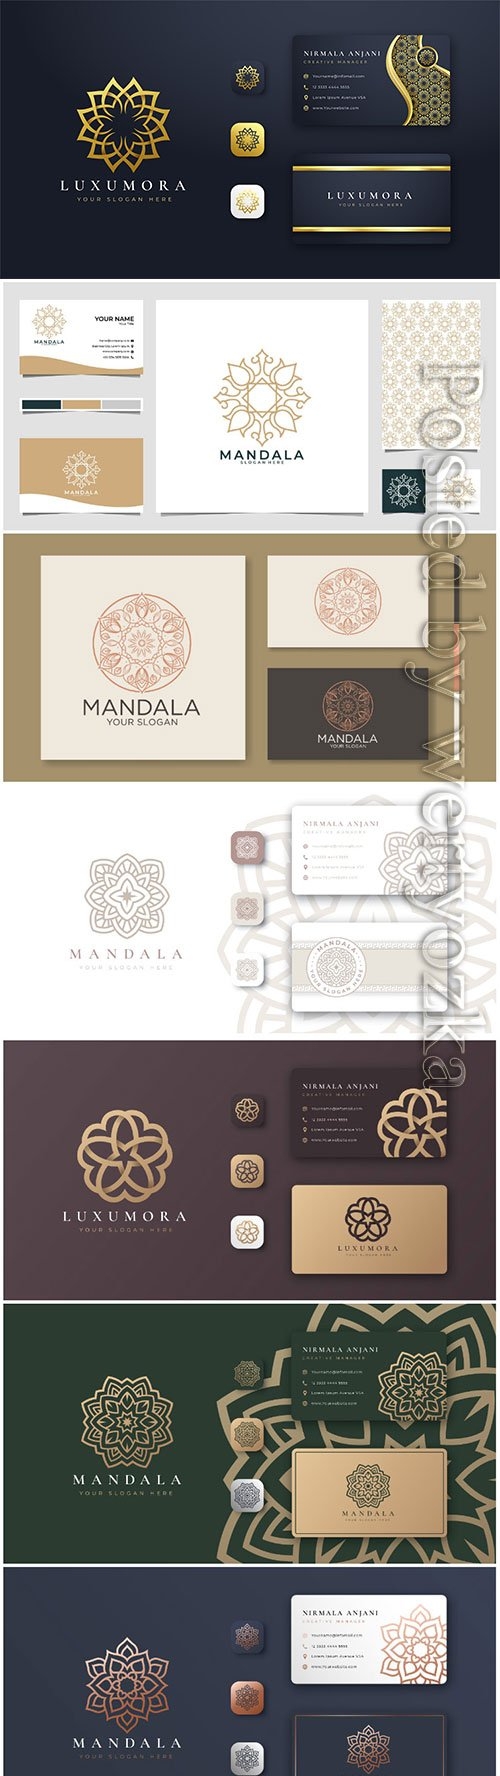 Golden mandala logo with business card premium vector